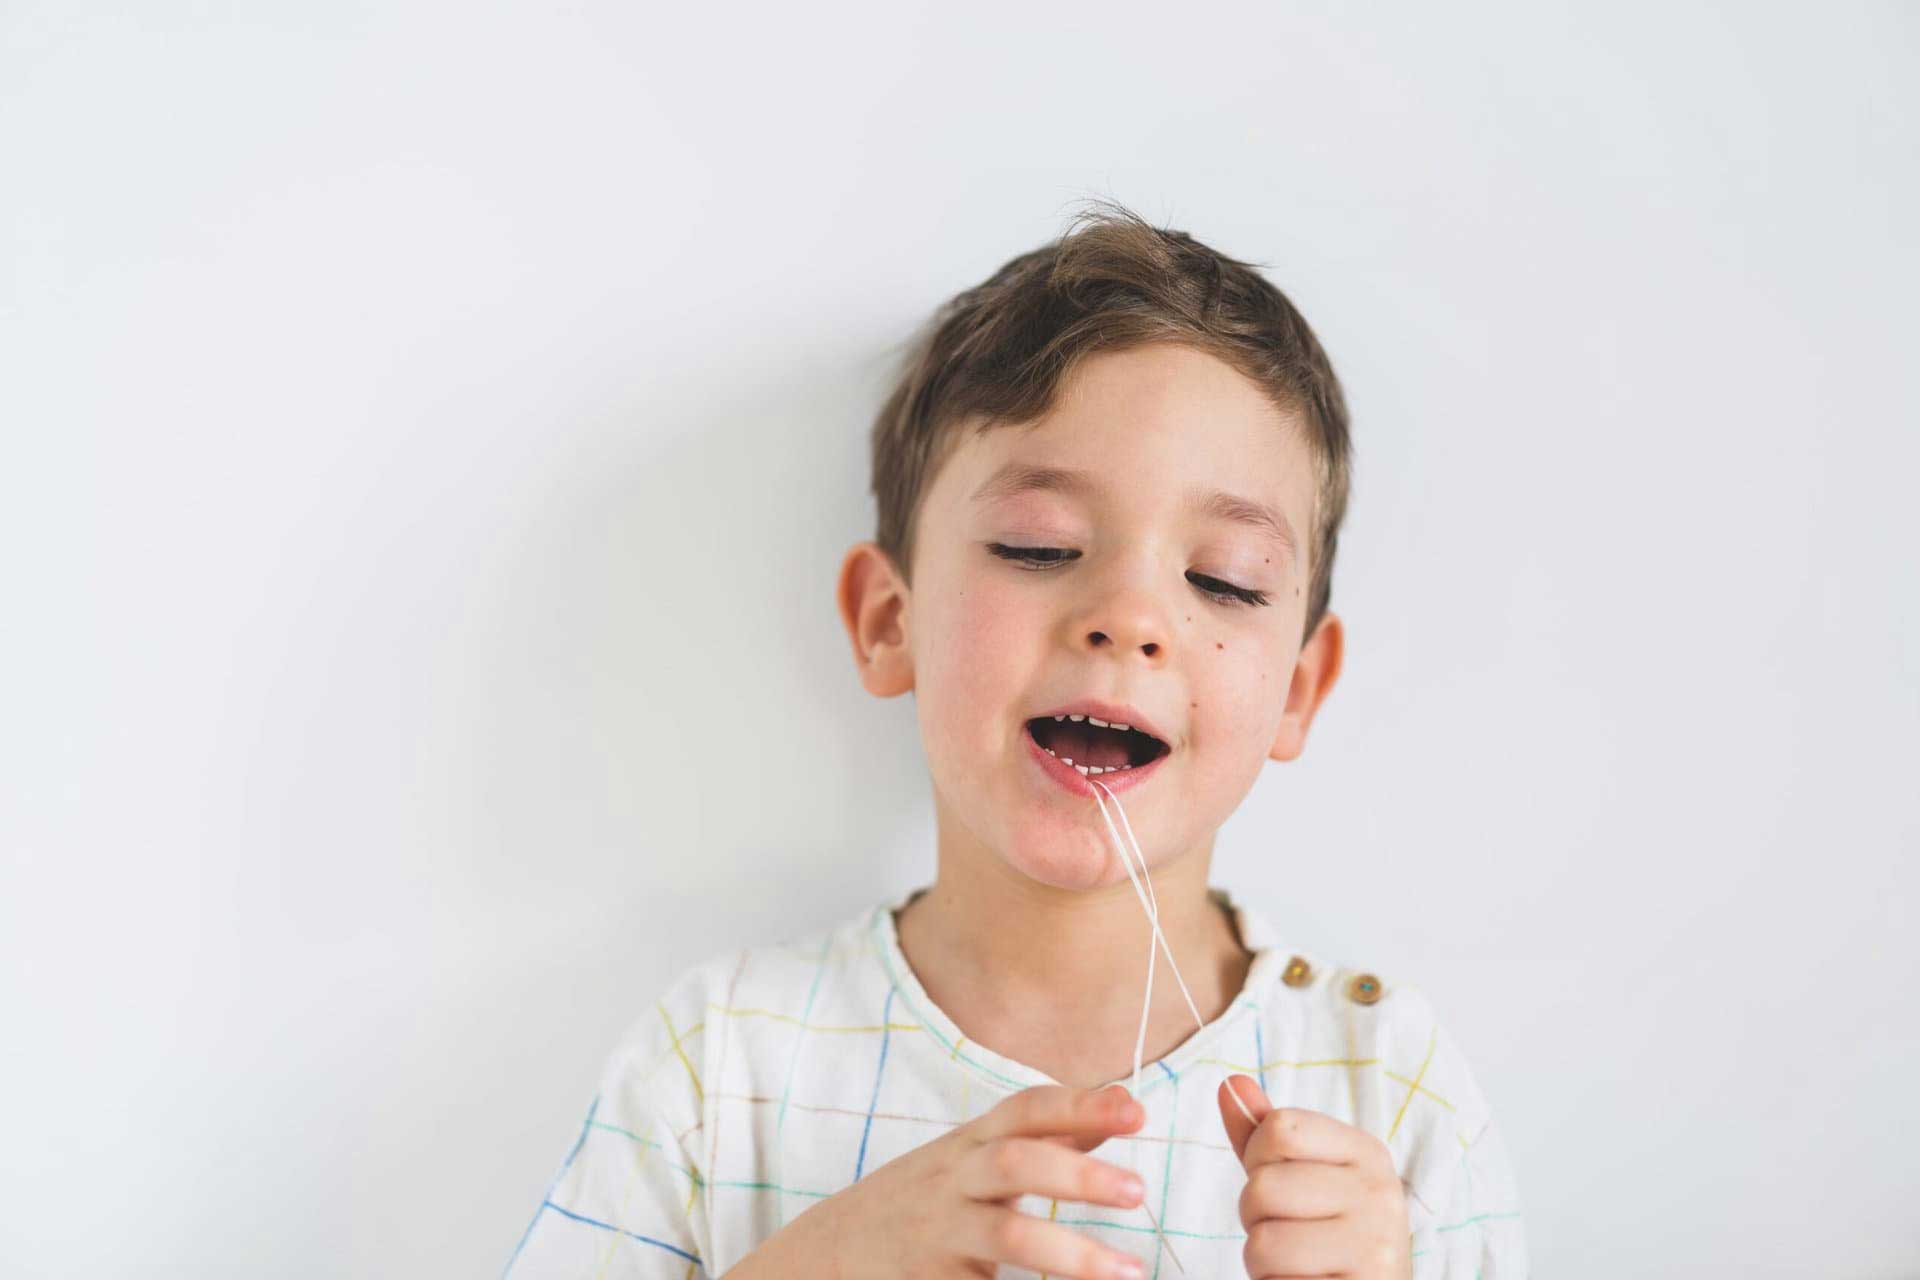 Young boy flossing his teeth